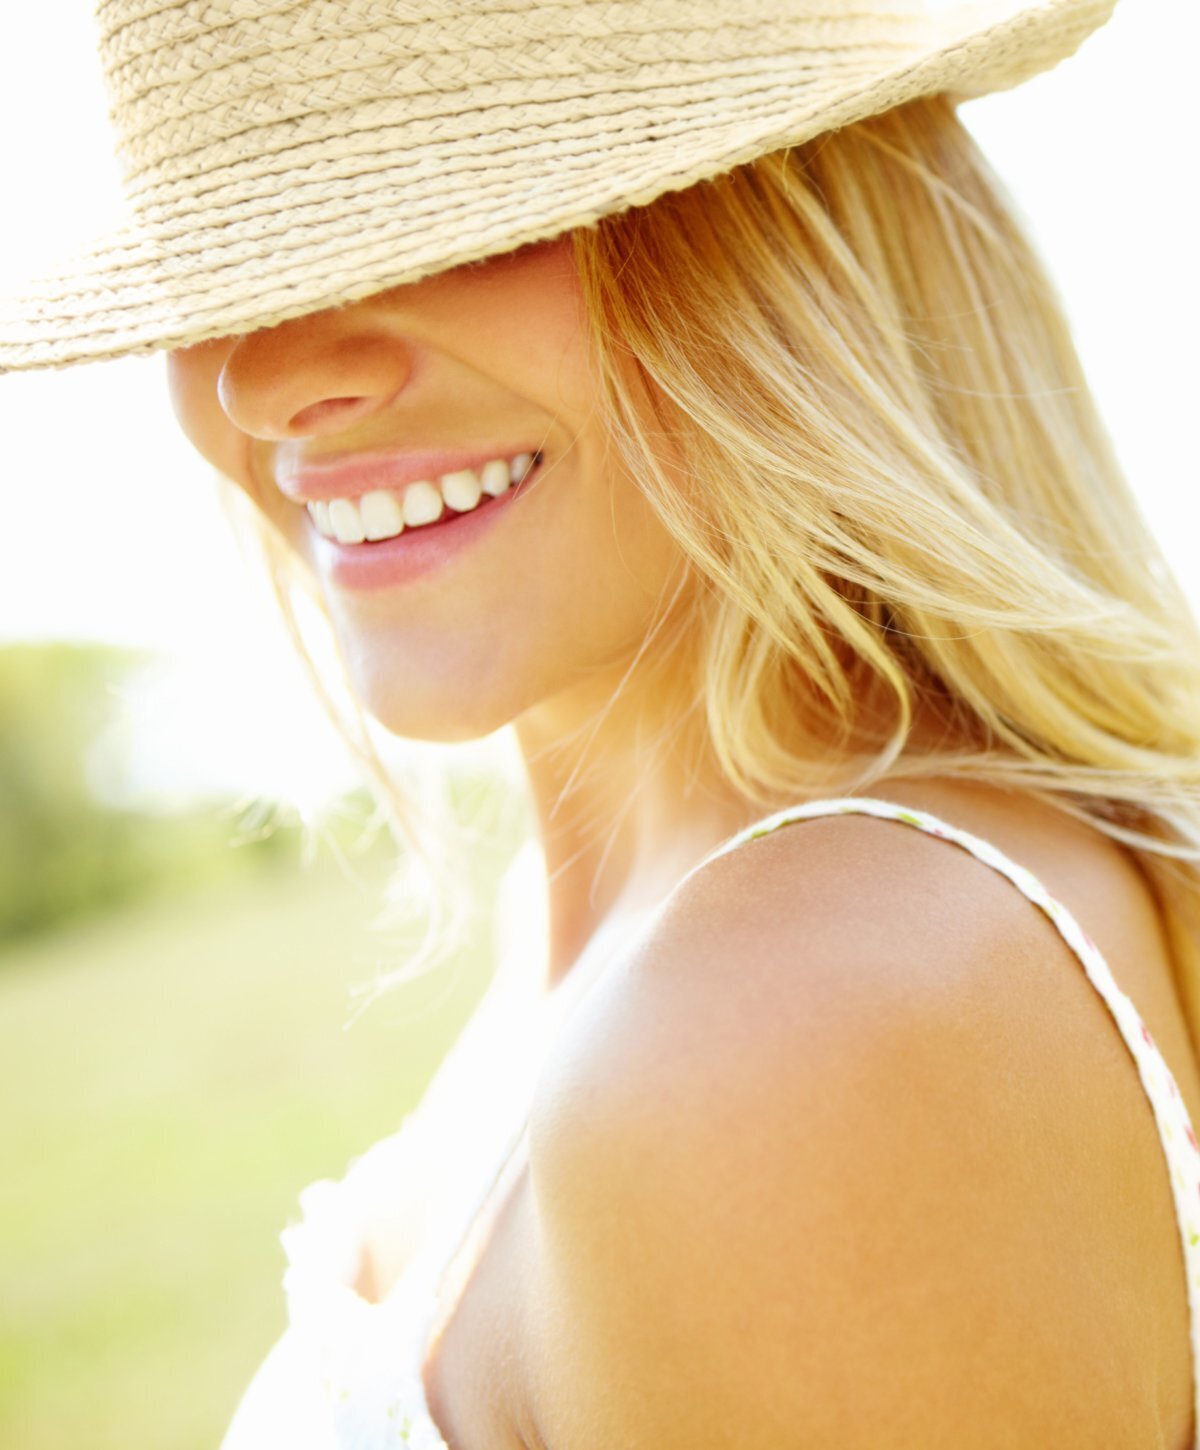 blonde Grand Rapids skinvive patient model smiling in a sun hat